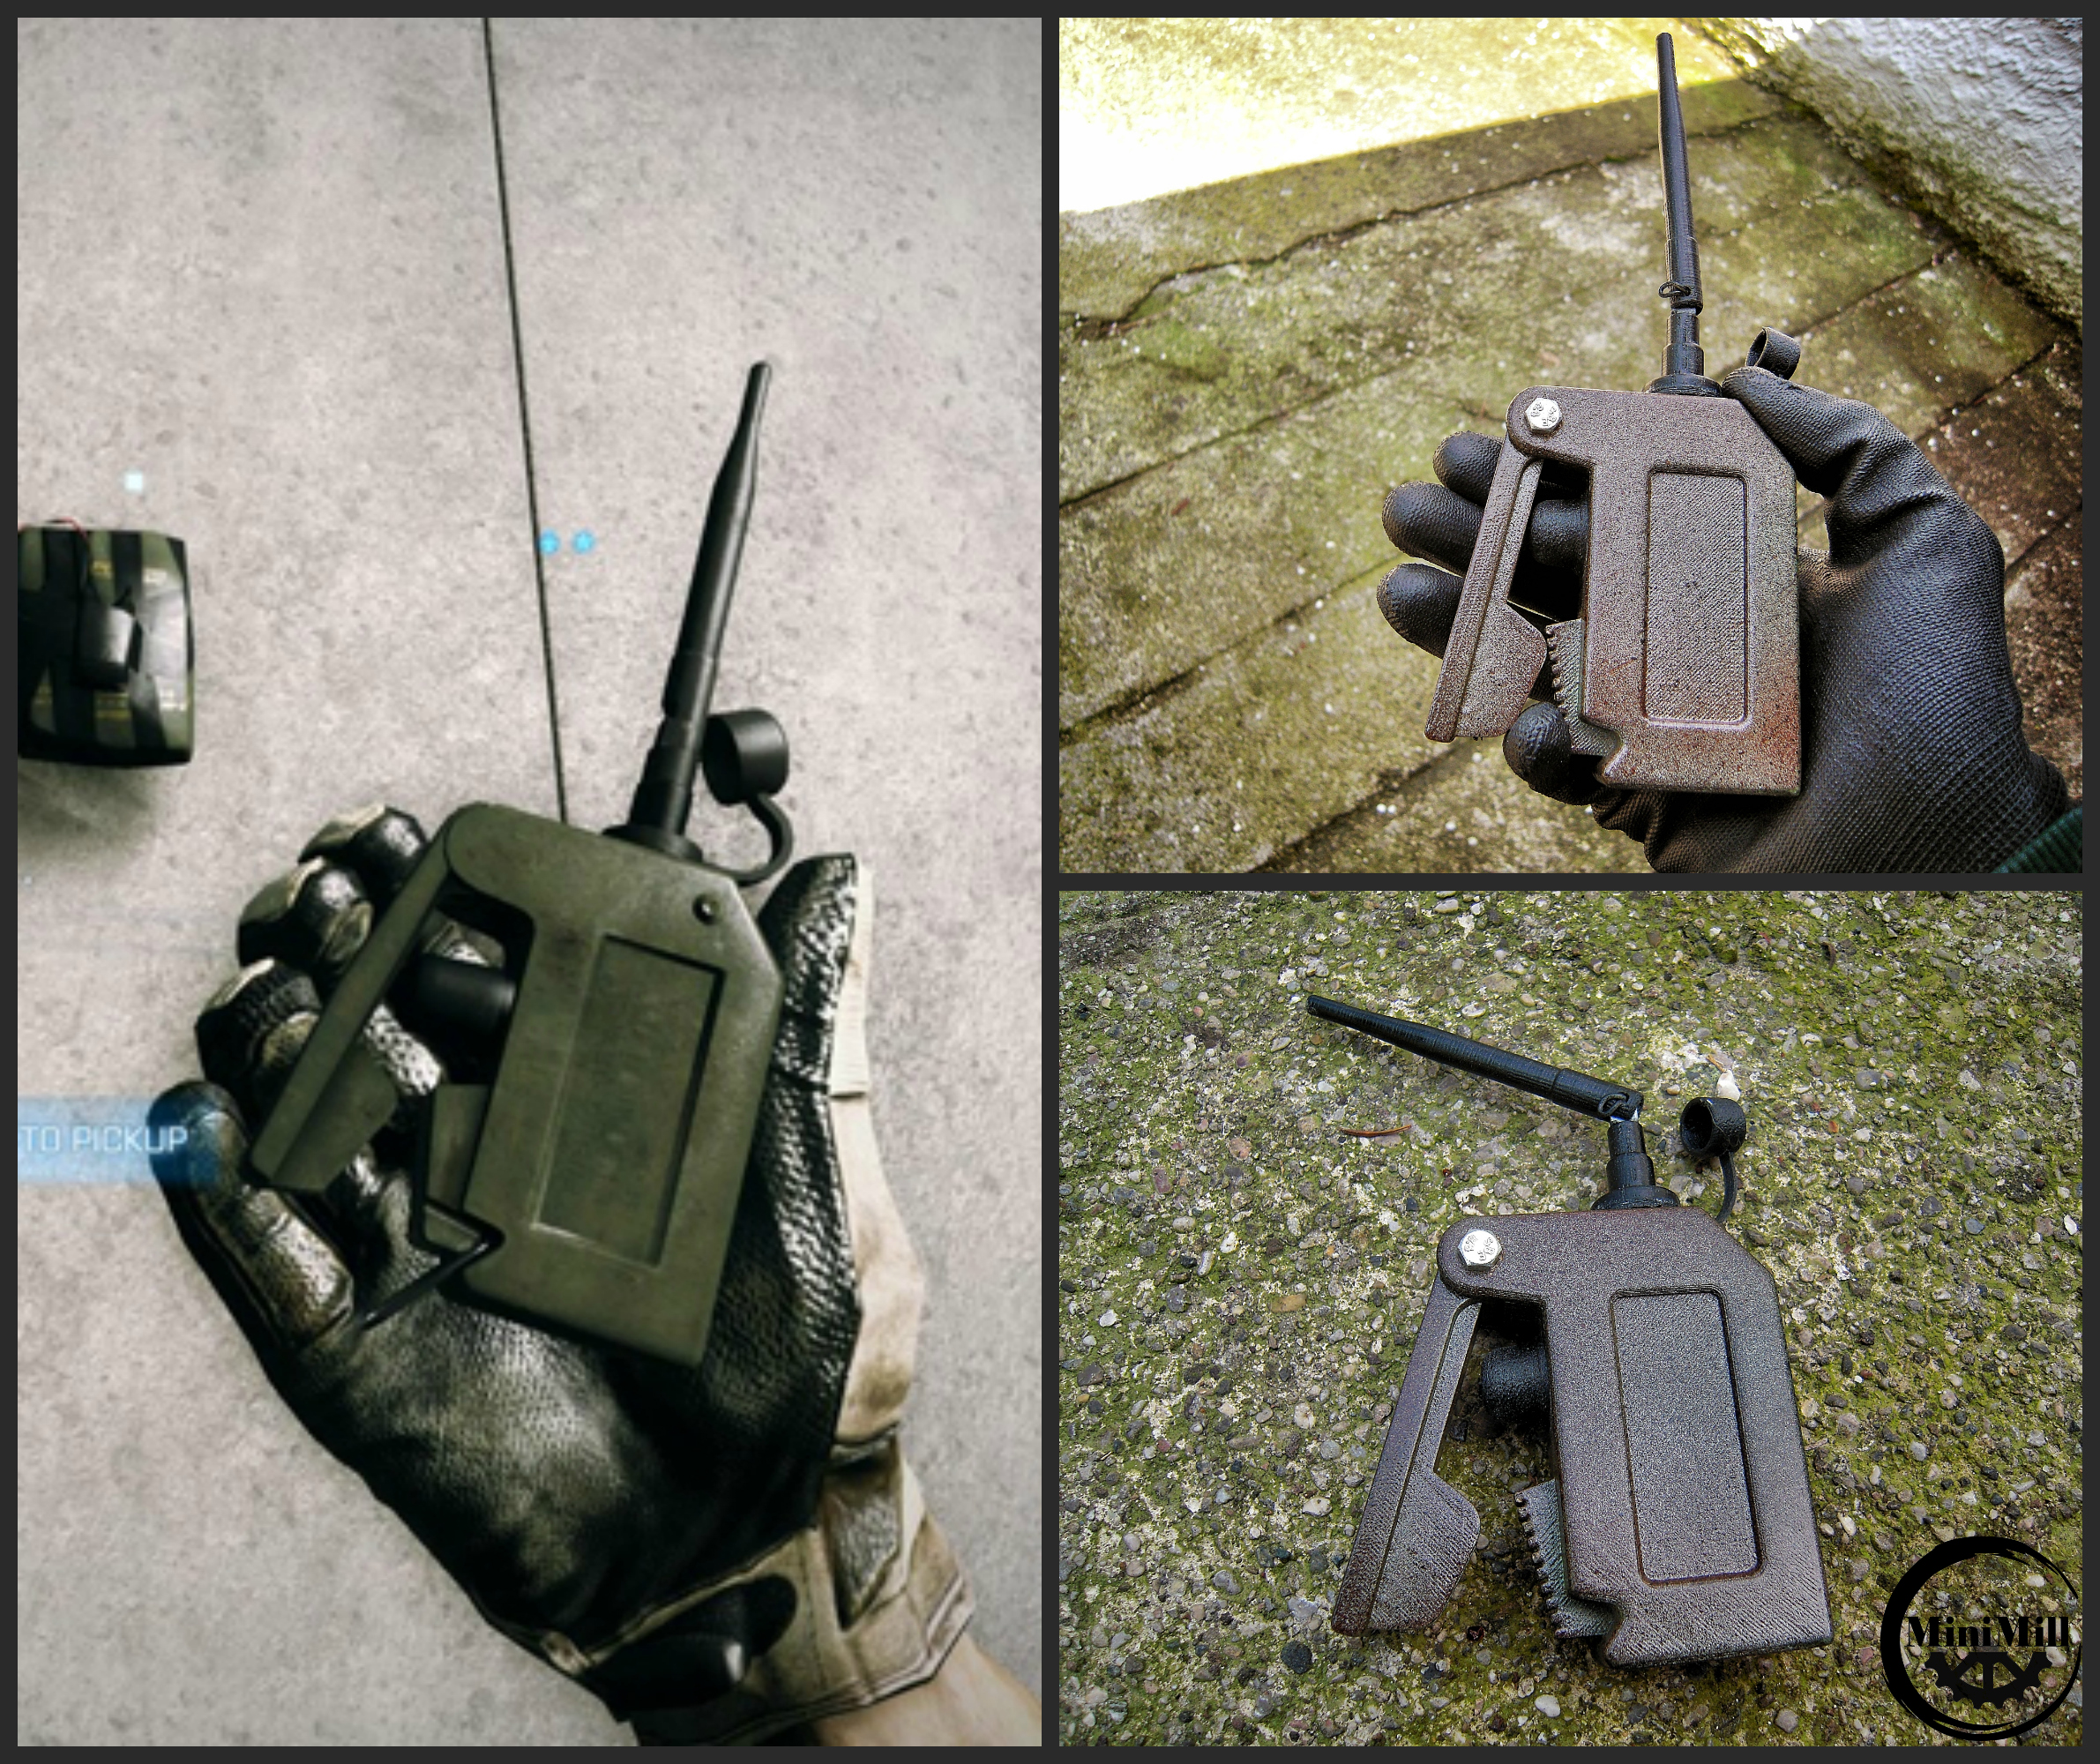 C4 Remote Detonator Battlefield 4 By MiniMillArt On.